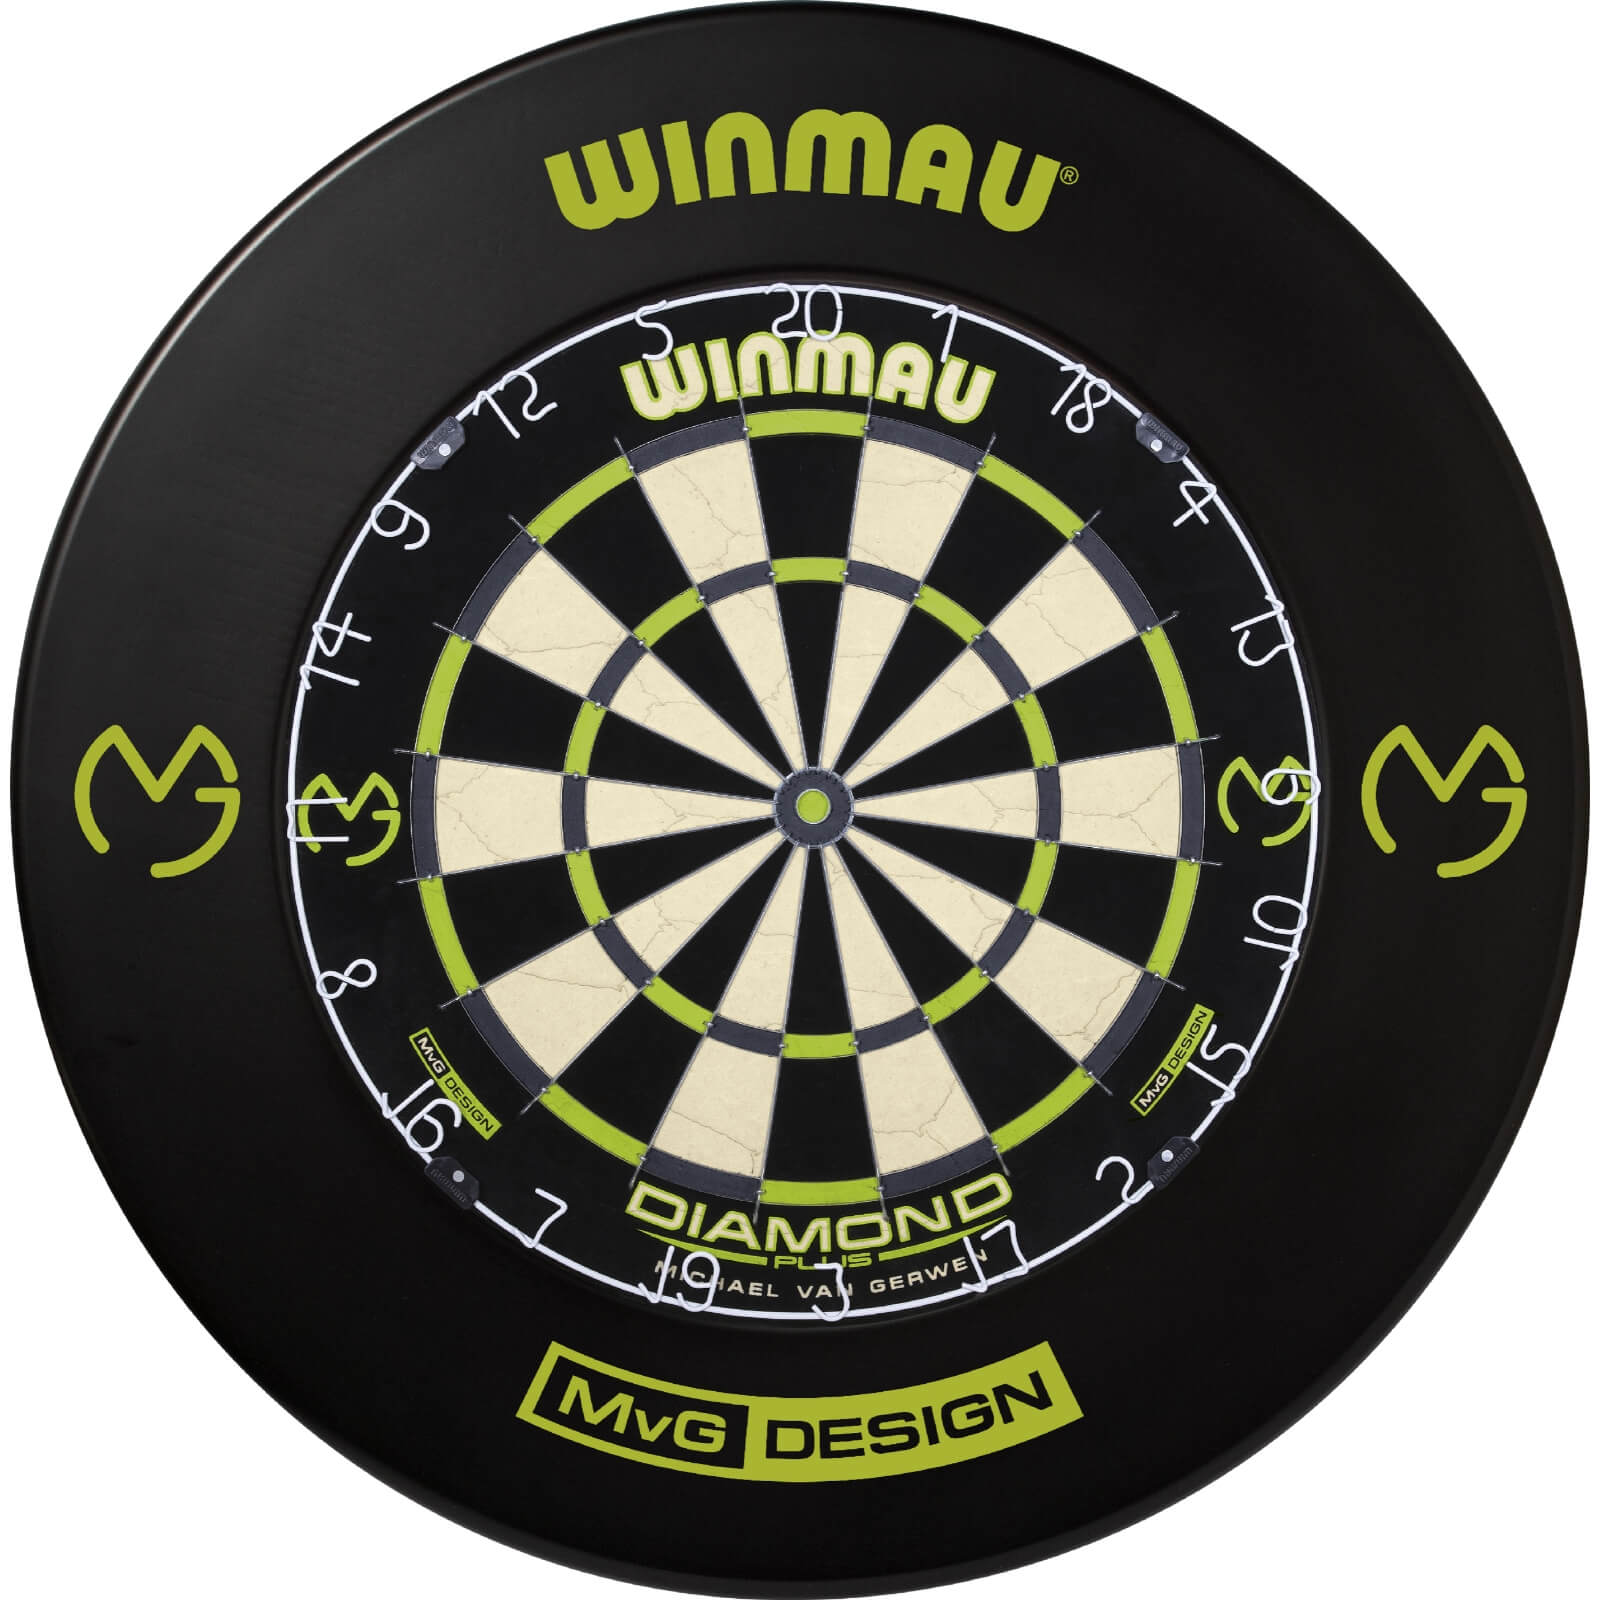 Dartboards - Winmau - MvG Design Dartboard & Surround Package 